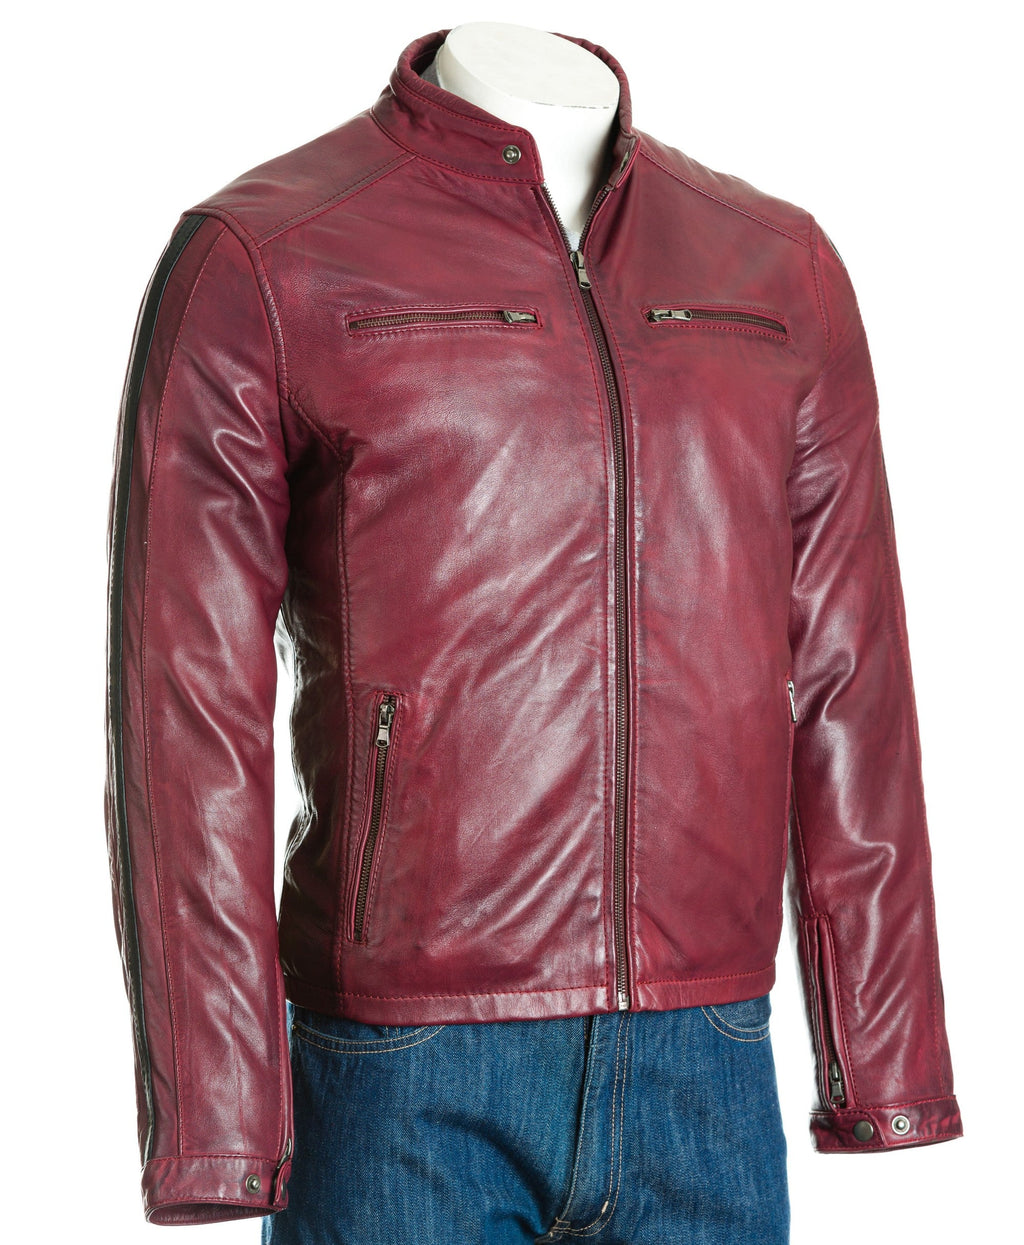 Men's Pepsi Red Tab Collar Leather Biker Jacket with Contrast Stripe Detail: Gavino